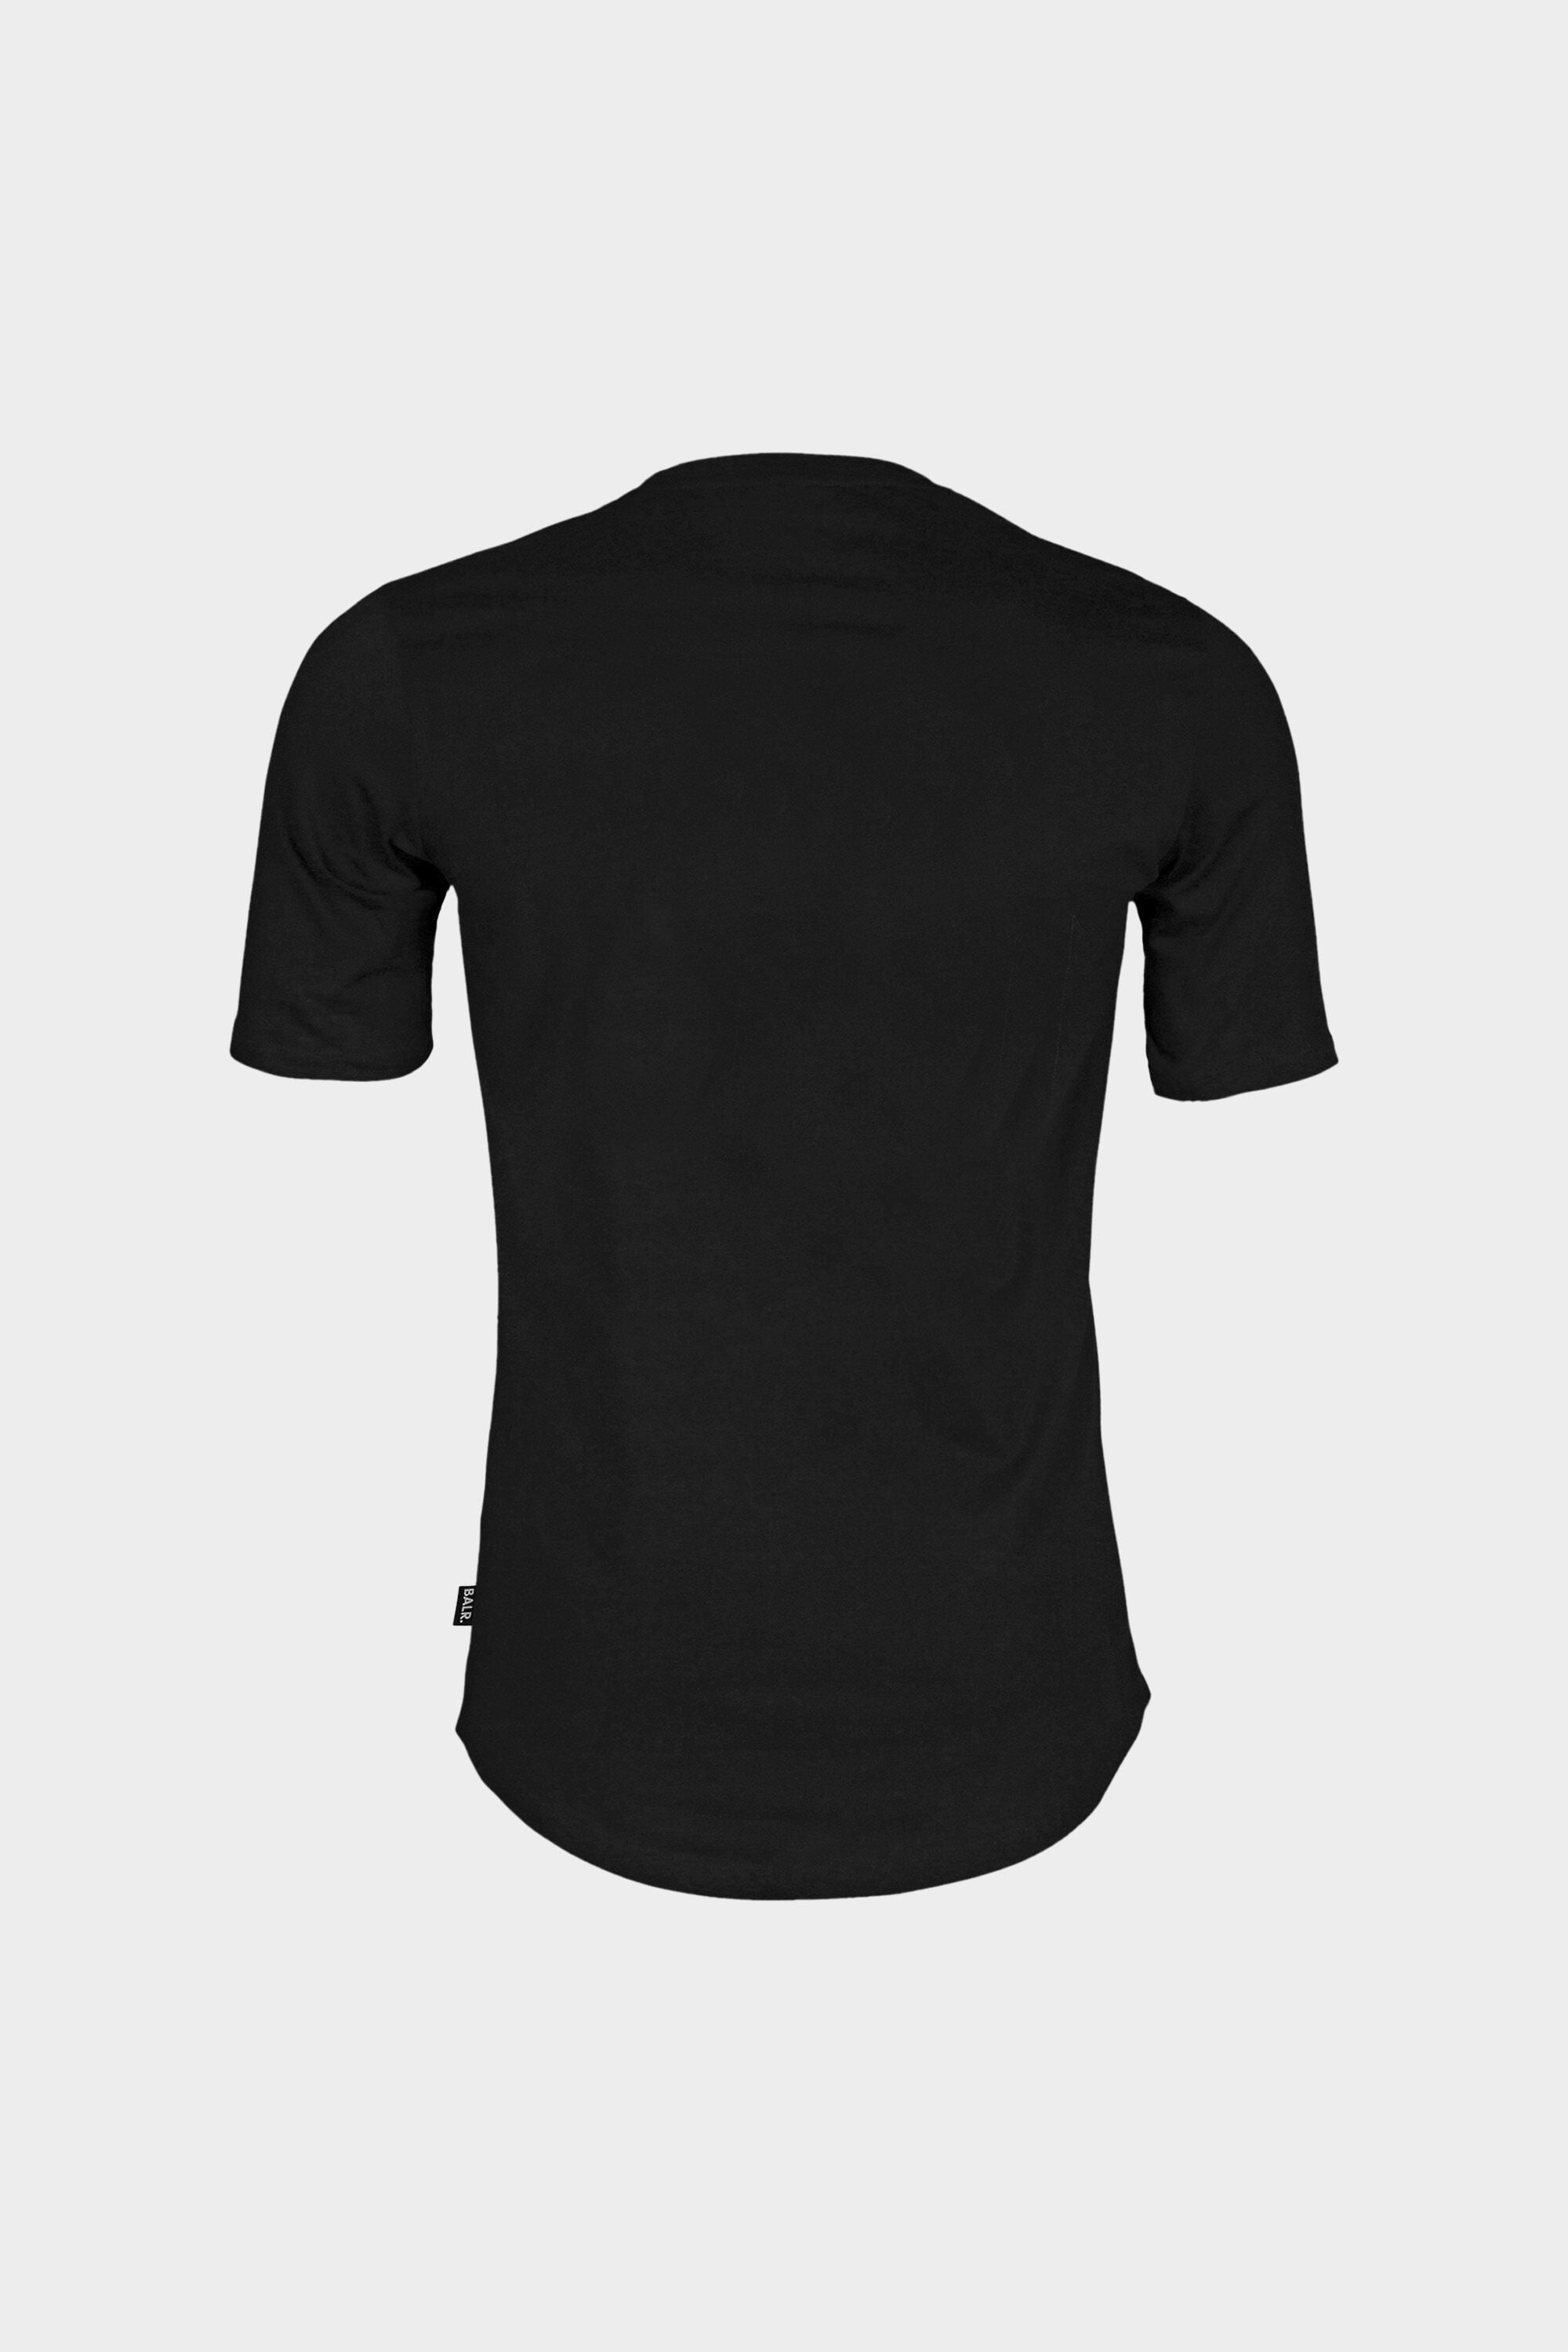 plain black t shirt with collar